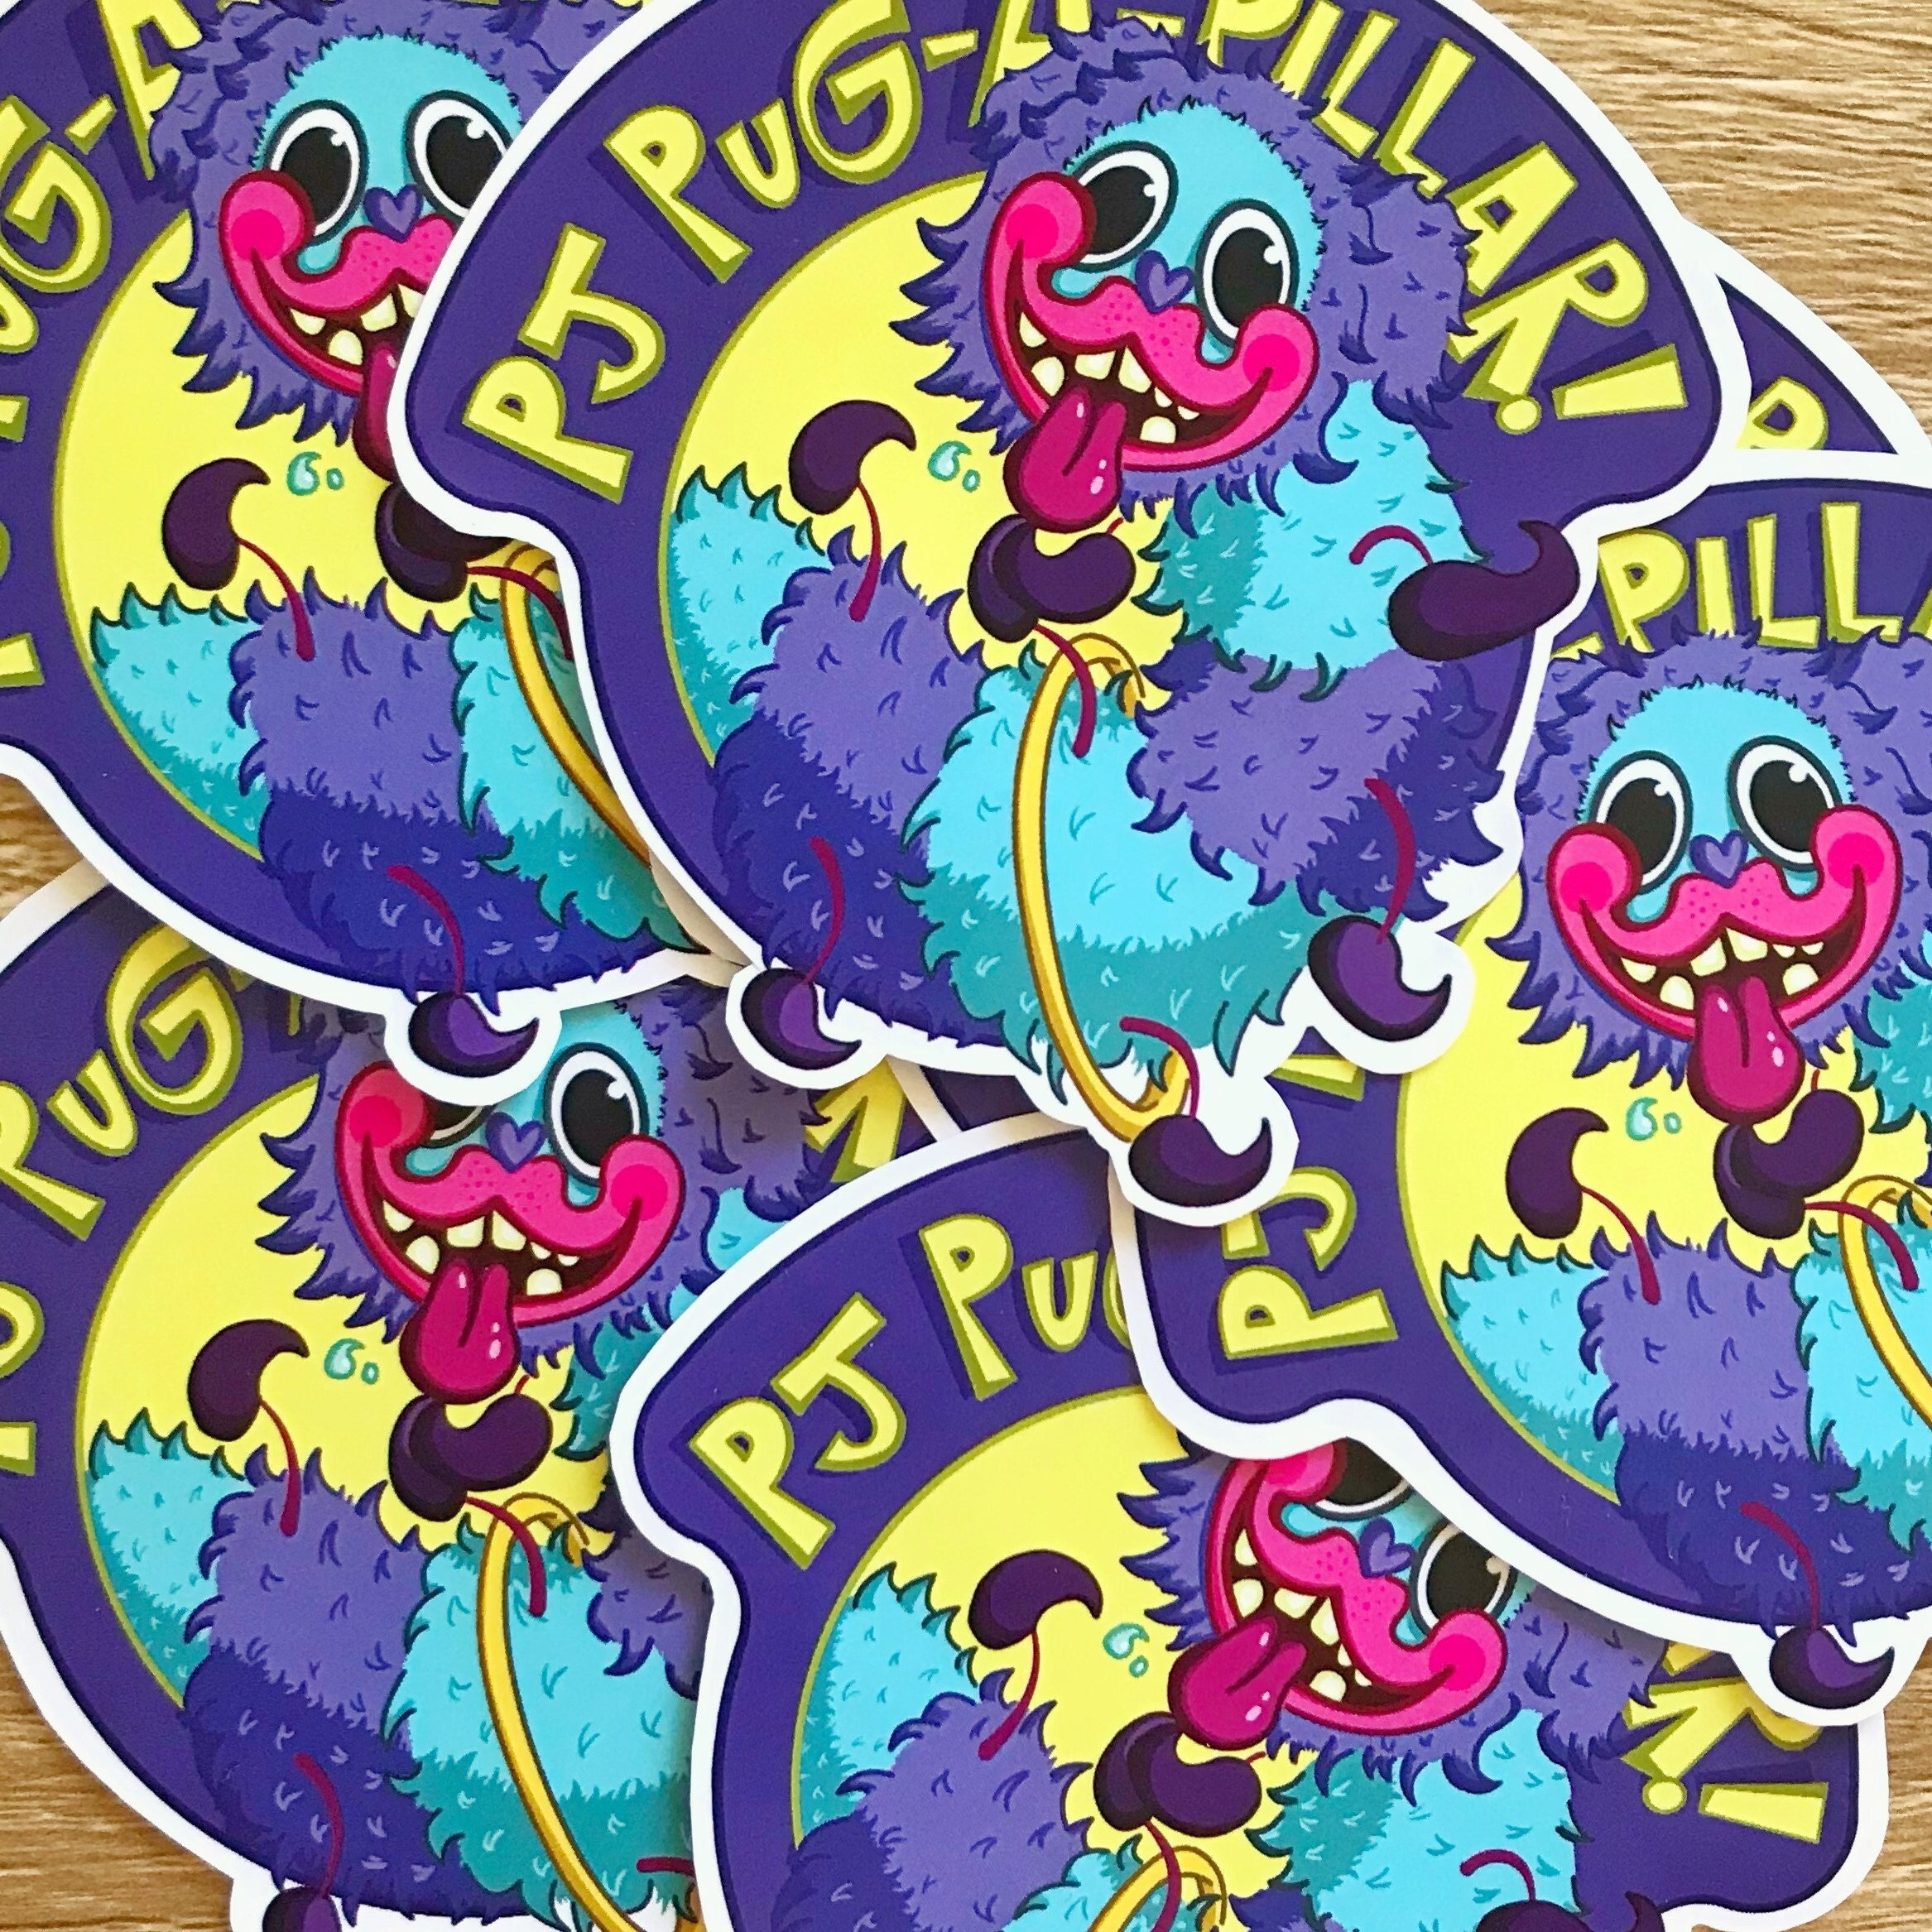 Poppy Playtime Chapter 2 pluche knuffel – PJ Pug-a-Pillar